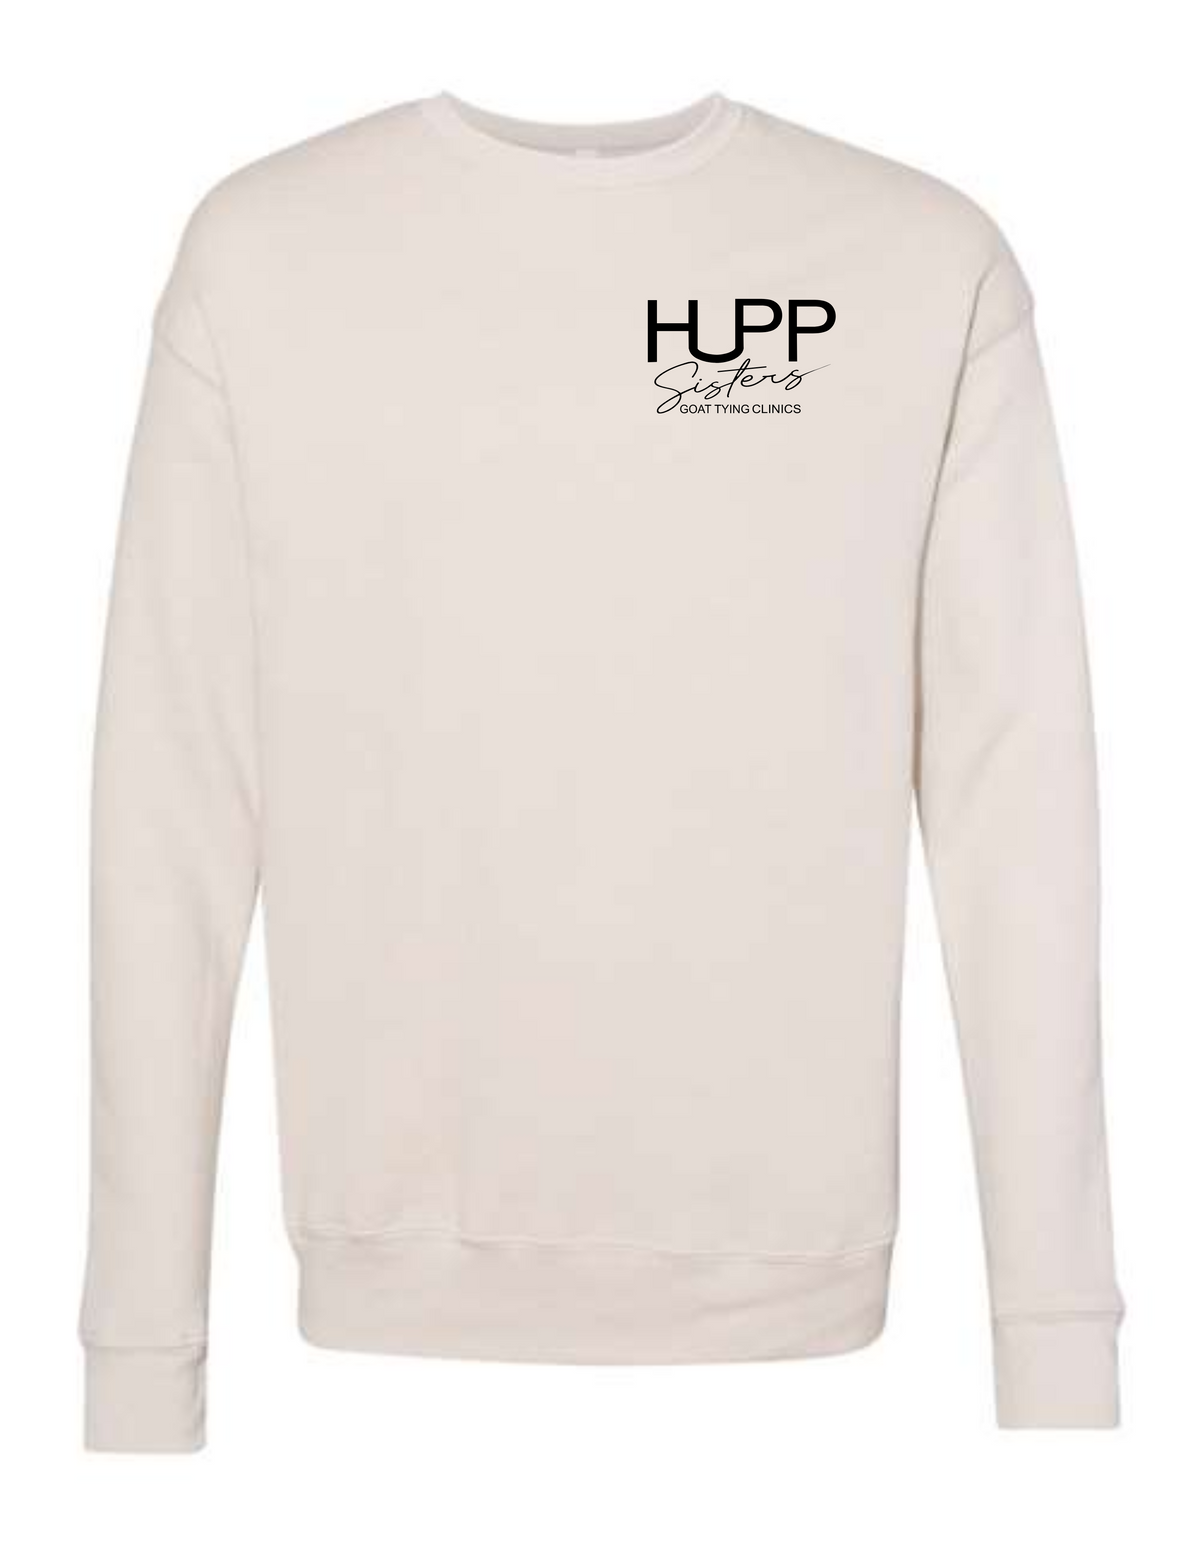 Hupp Sisters BELLA+CANVAS ® Unisex Crewneck Sweatshirt